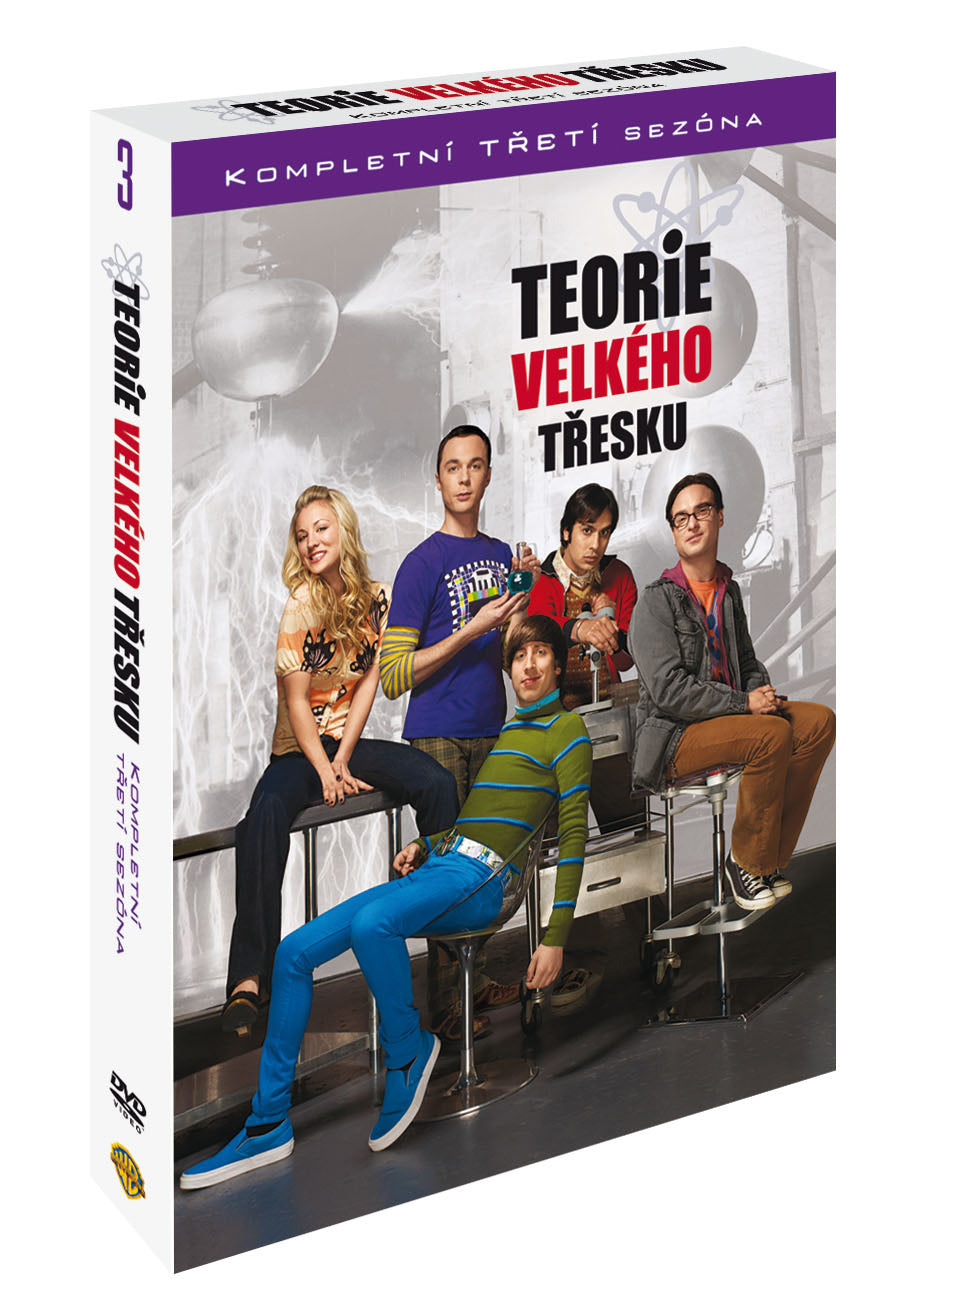 Teorie velkeho tresku 3. serie 3DVD / Big Bang Theory Season 3